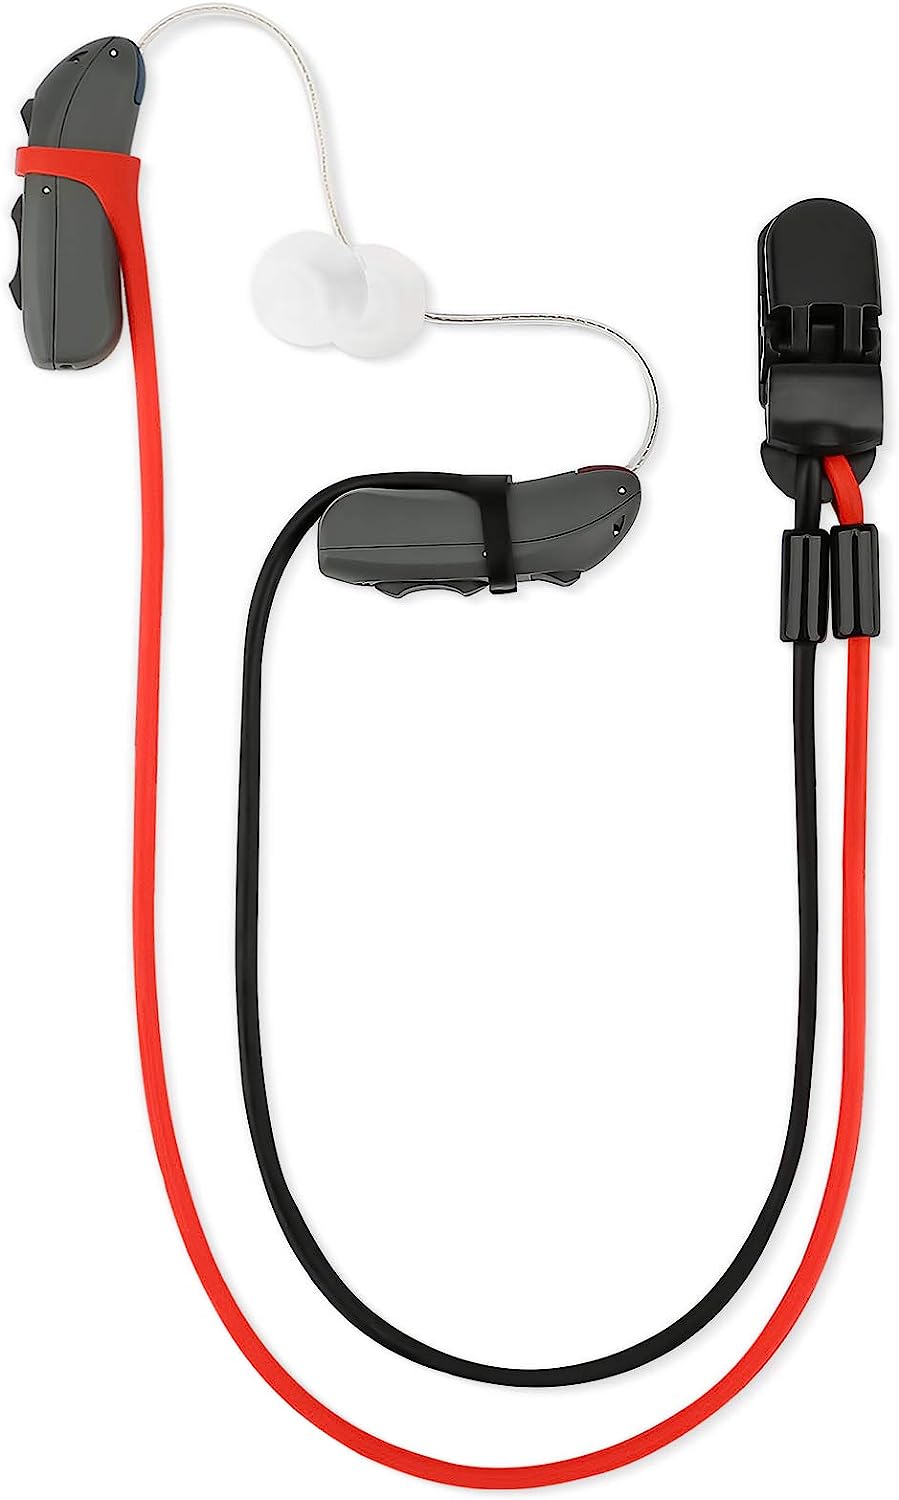 vivtone D09 CIC rechargeable hearing aids